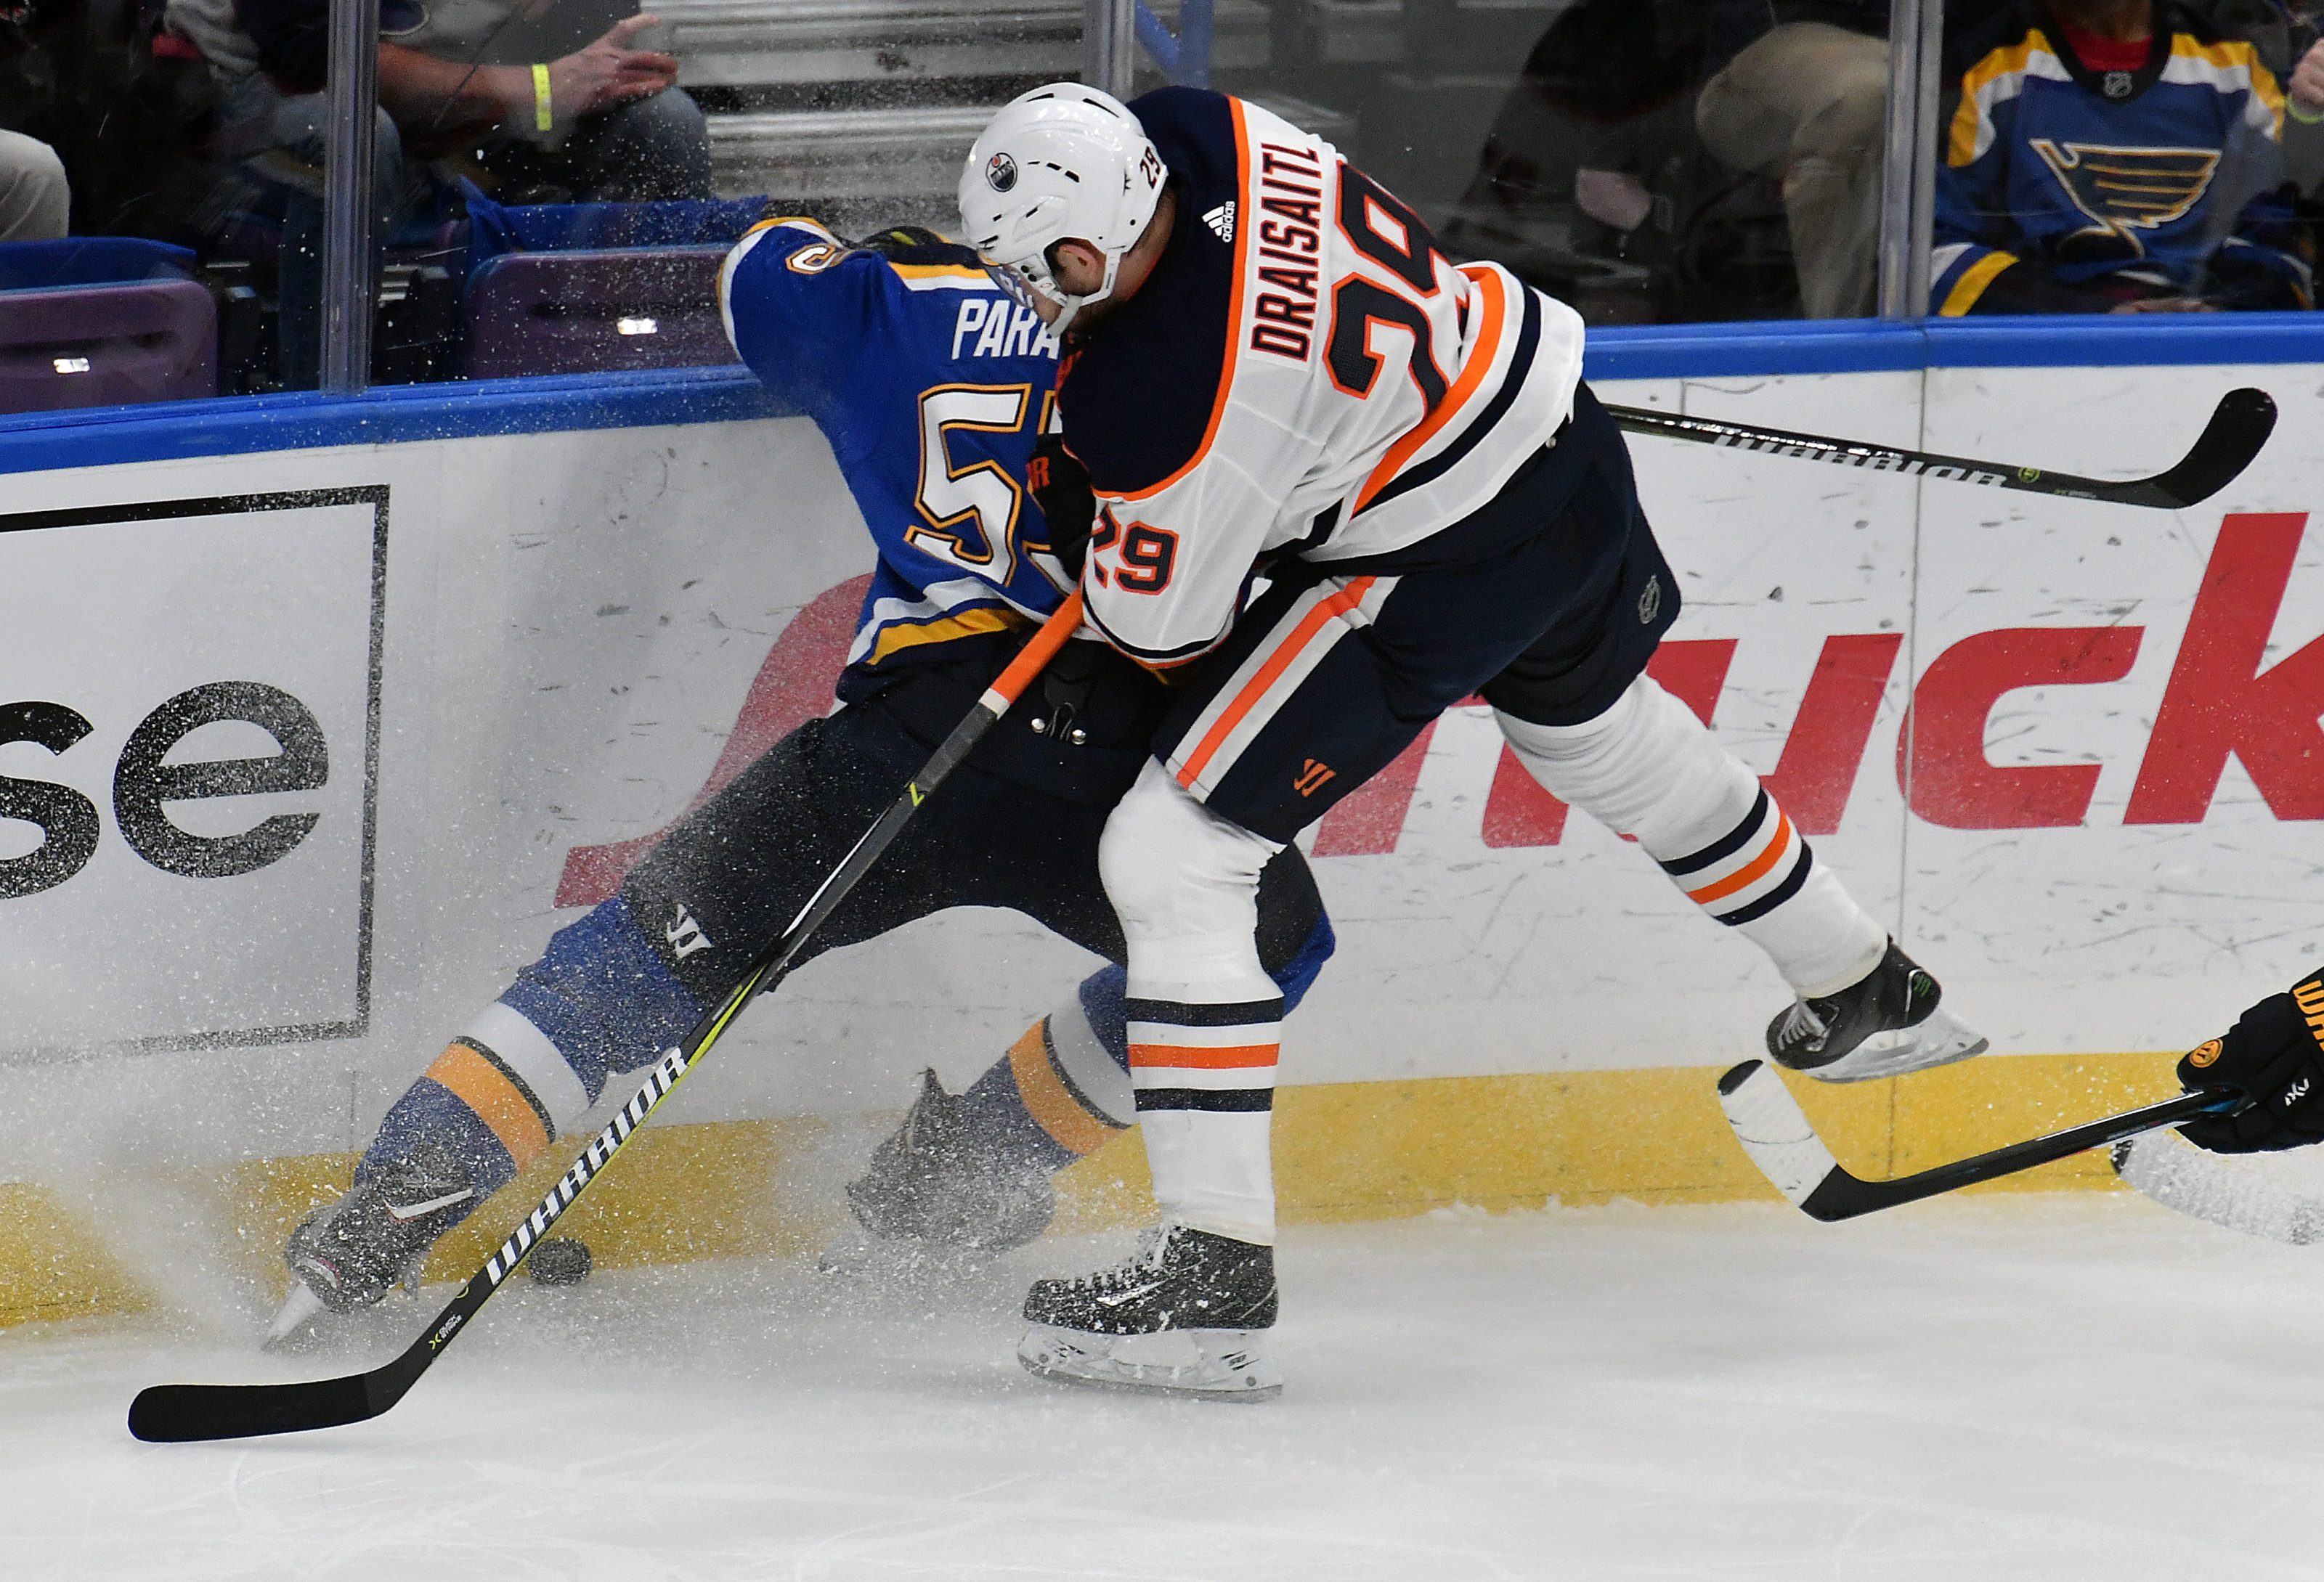 Could Erik Karlsson be the Edmonton Oilers' Chris Pronger? That